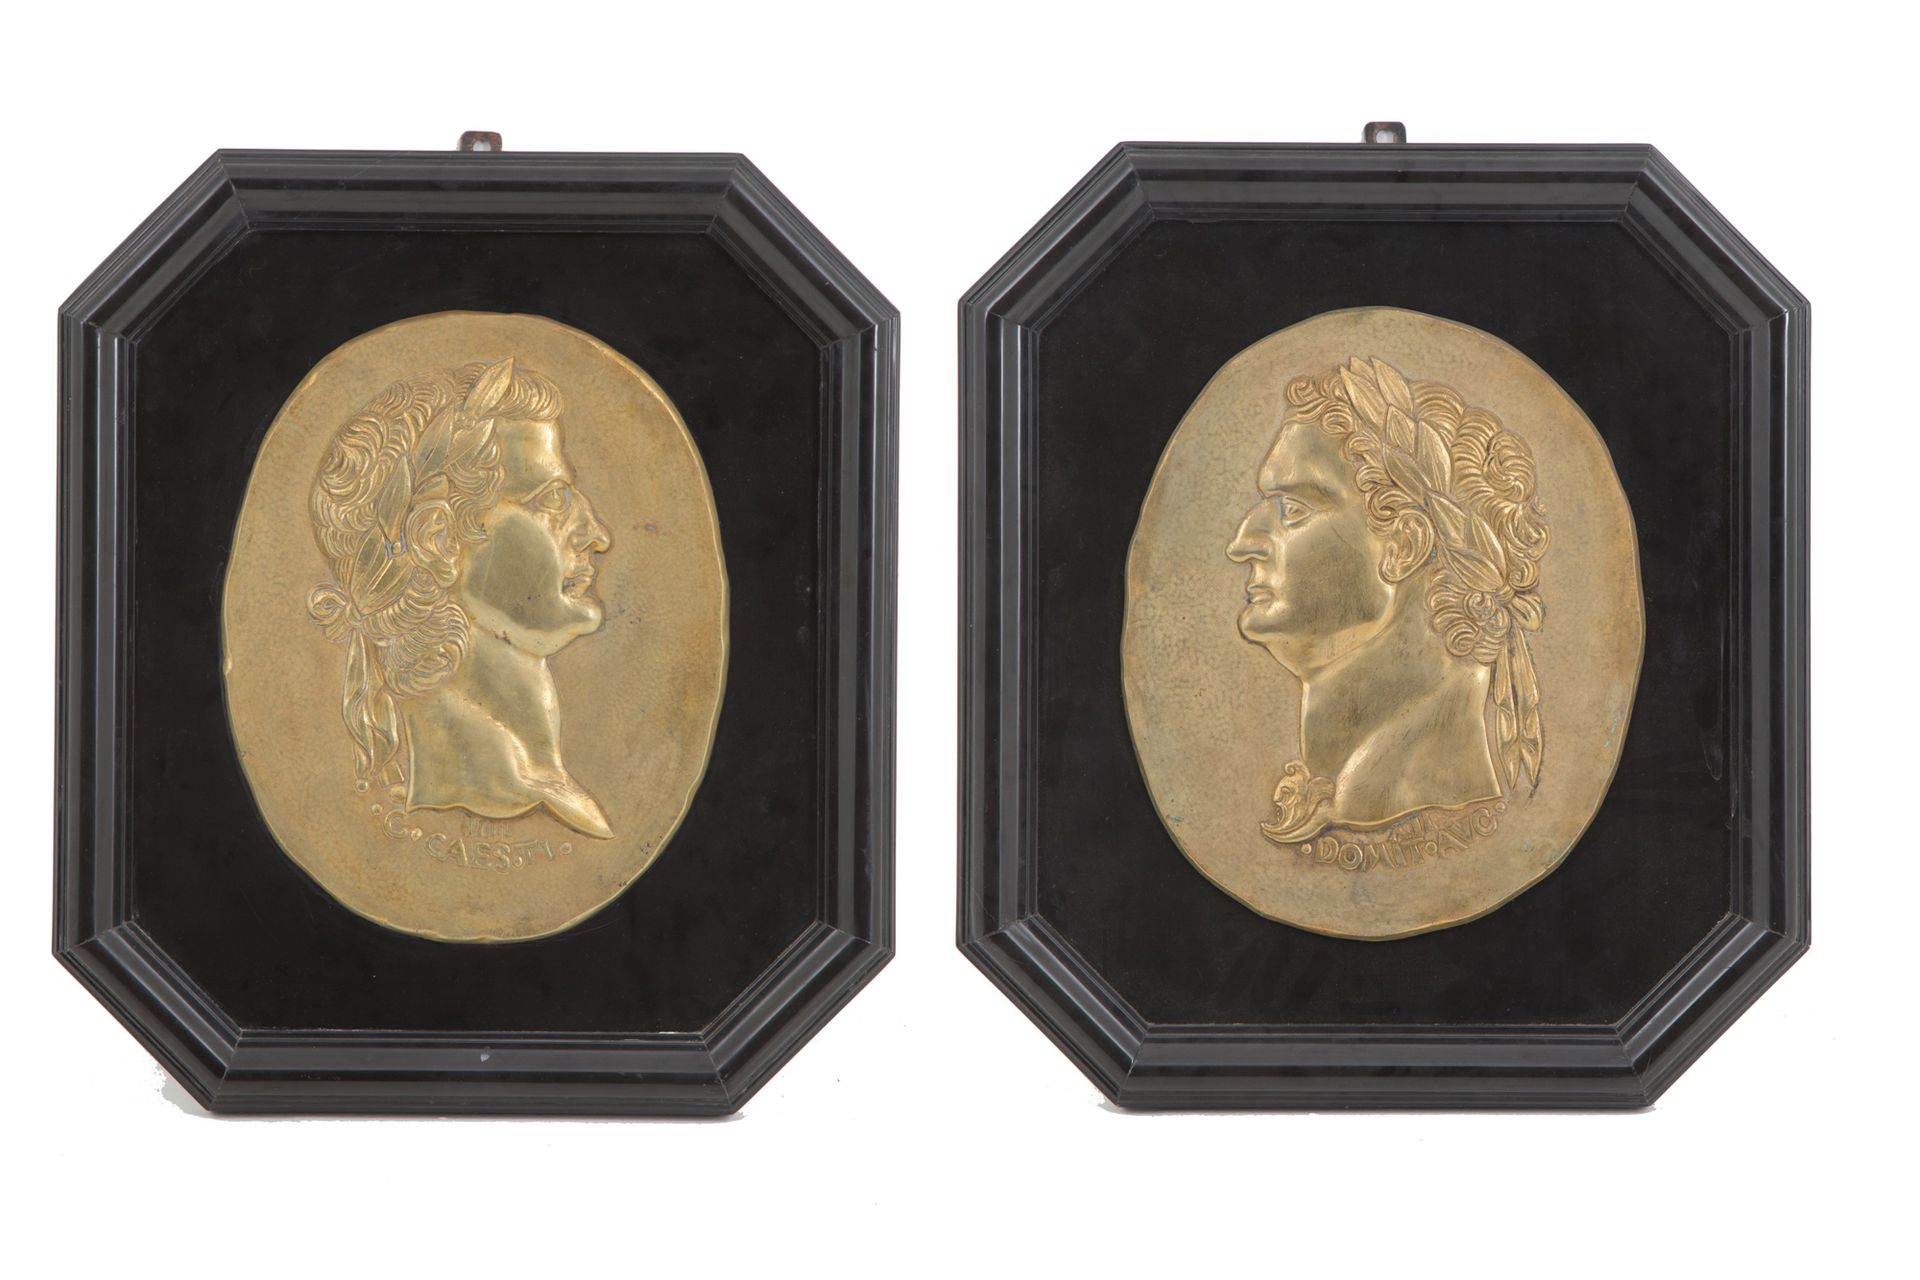 Pair of plates 大型镀金铜牌一对，描绘了 "皇帝的面孔"。19世纪。在黑色的比利时大理石框架中。约60x52x5厘米。